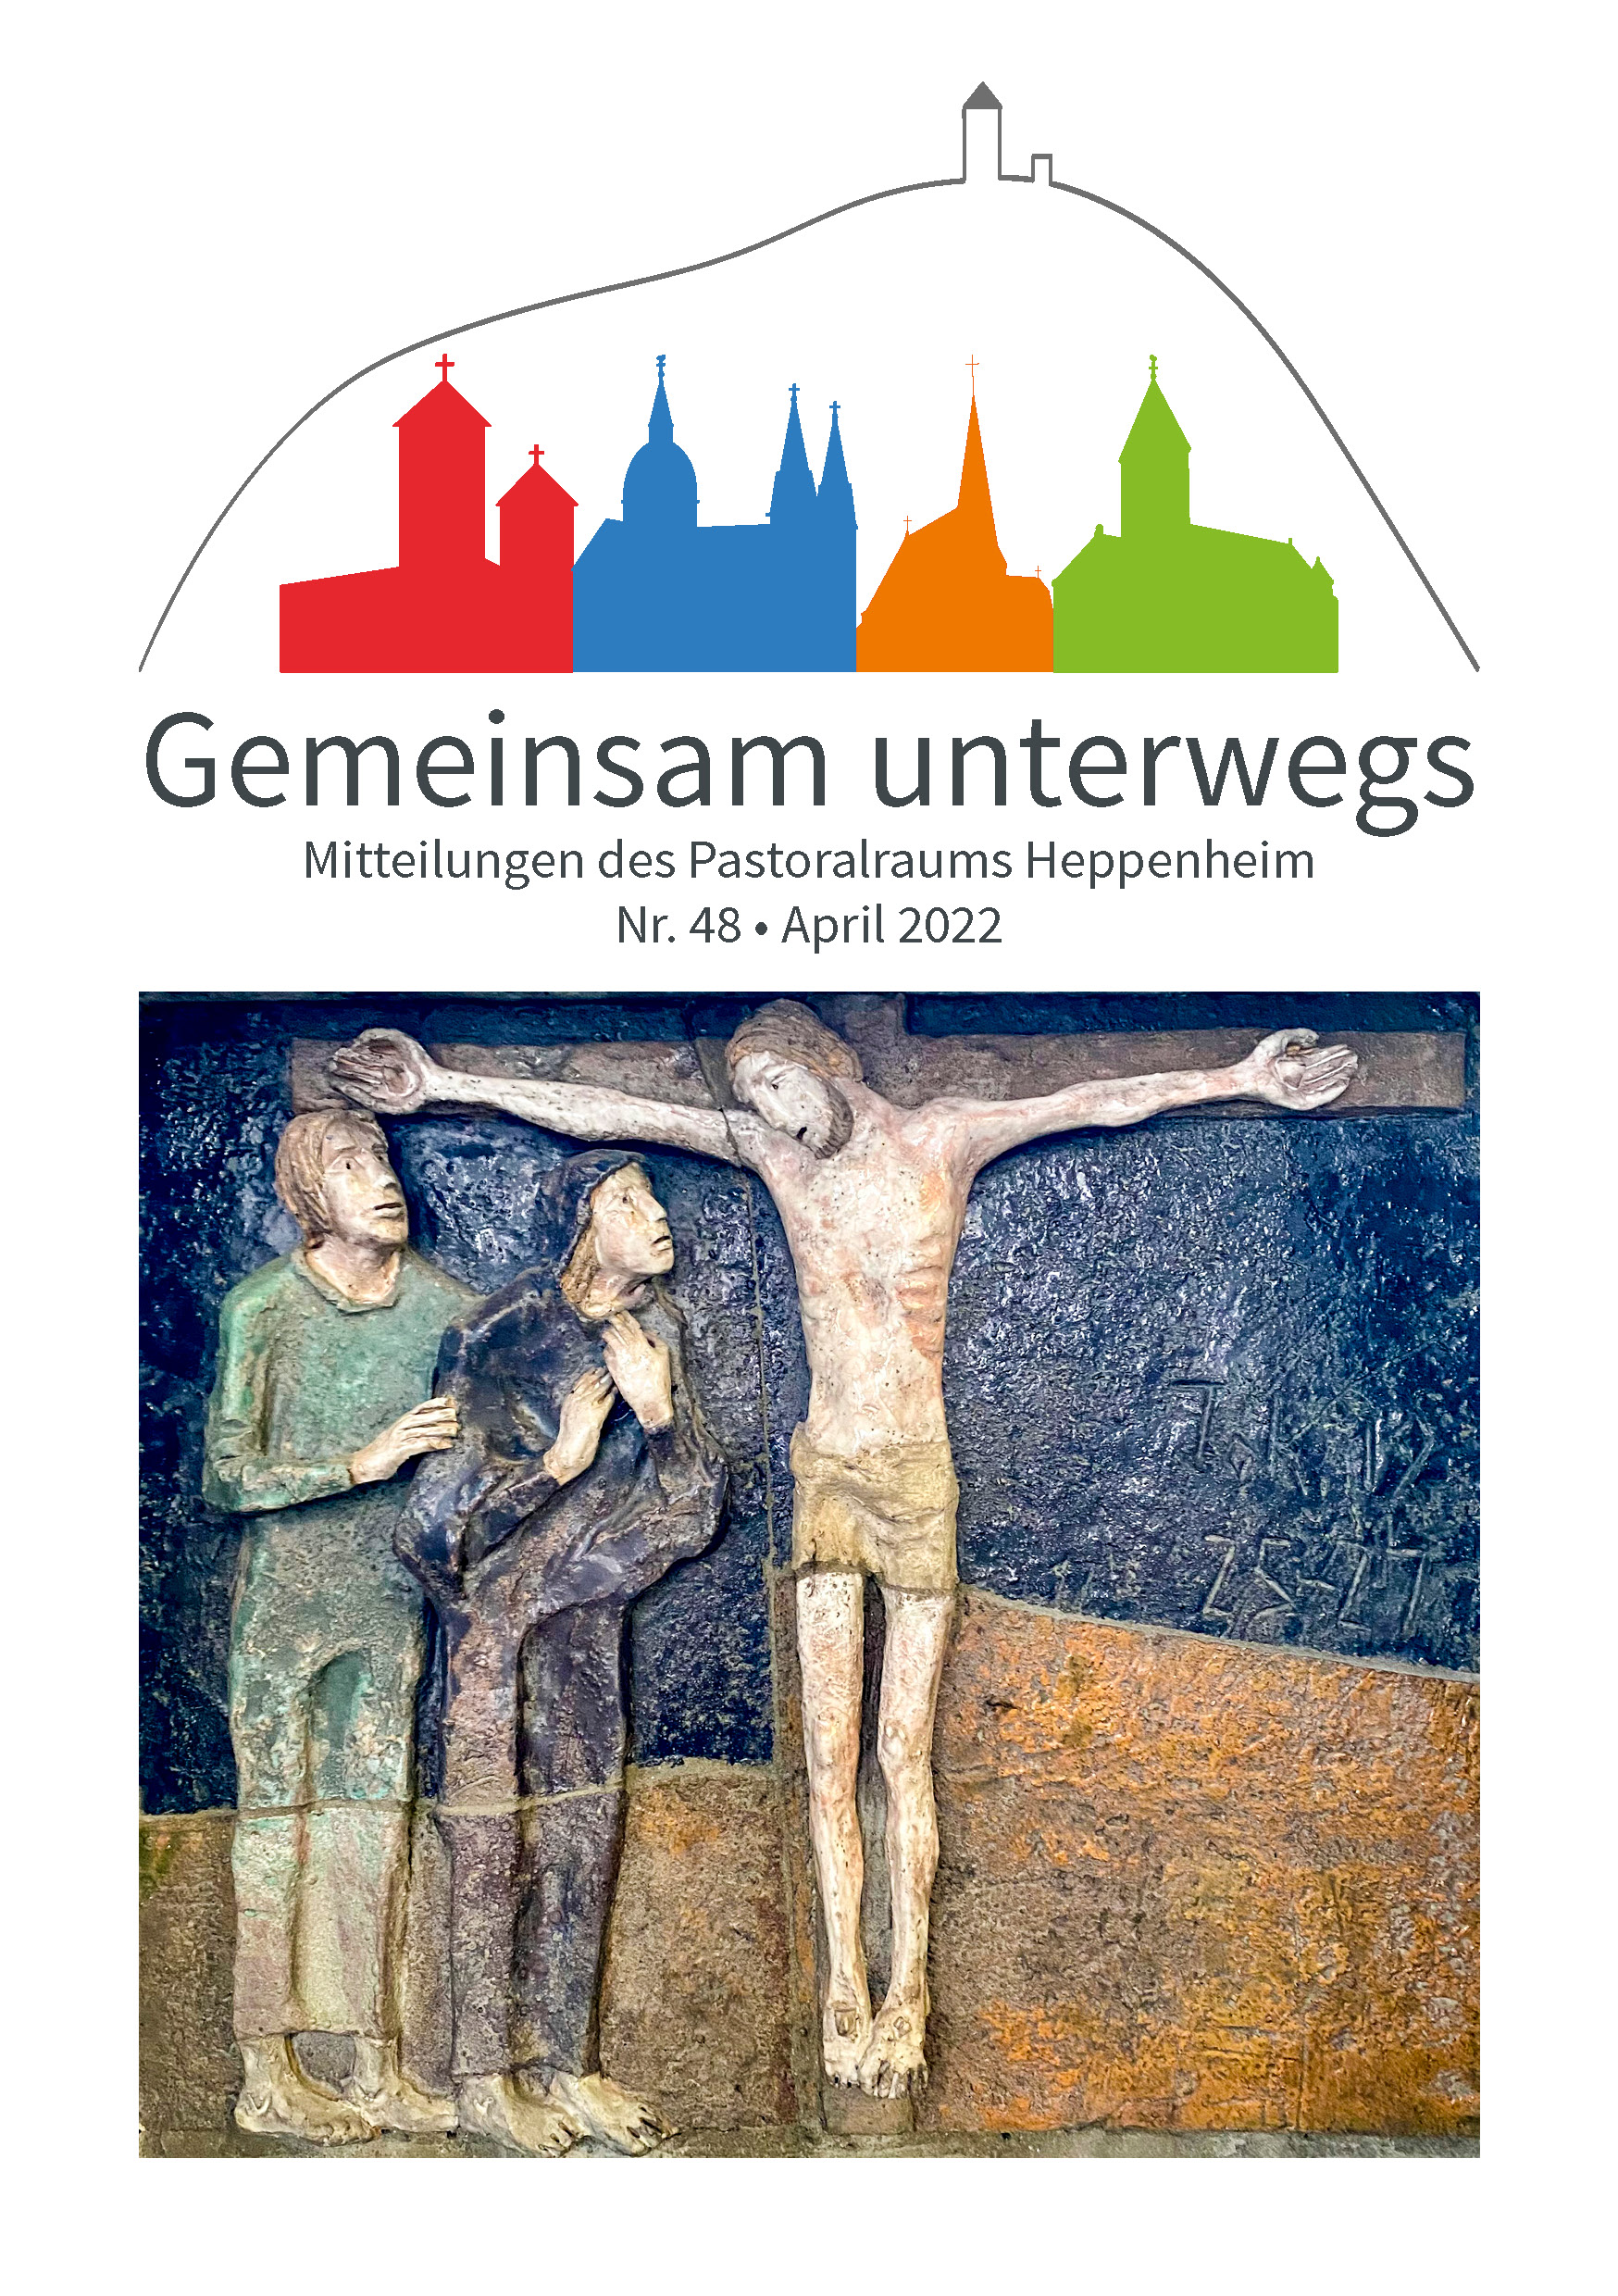 GU-April-22_Titelseite (c) PR Heppenheim